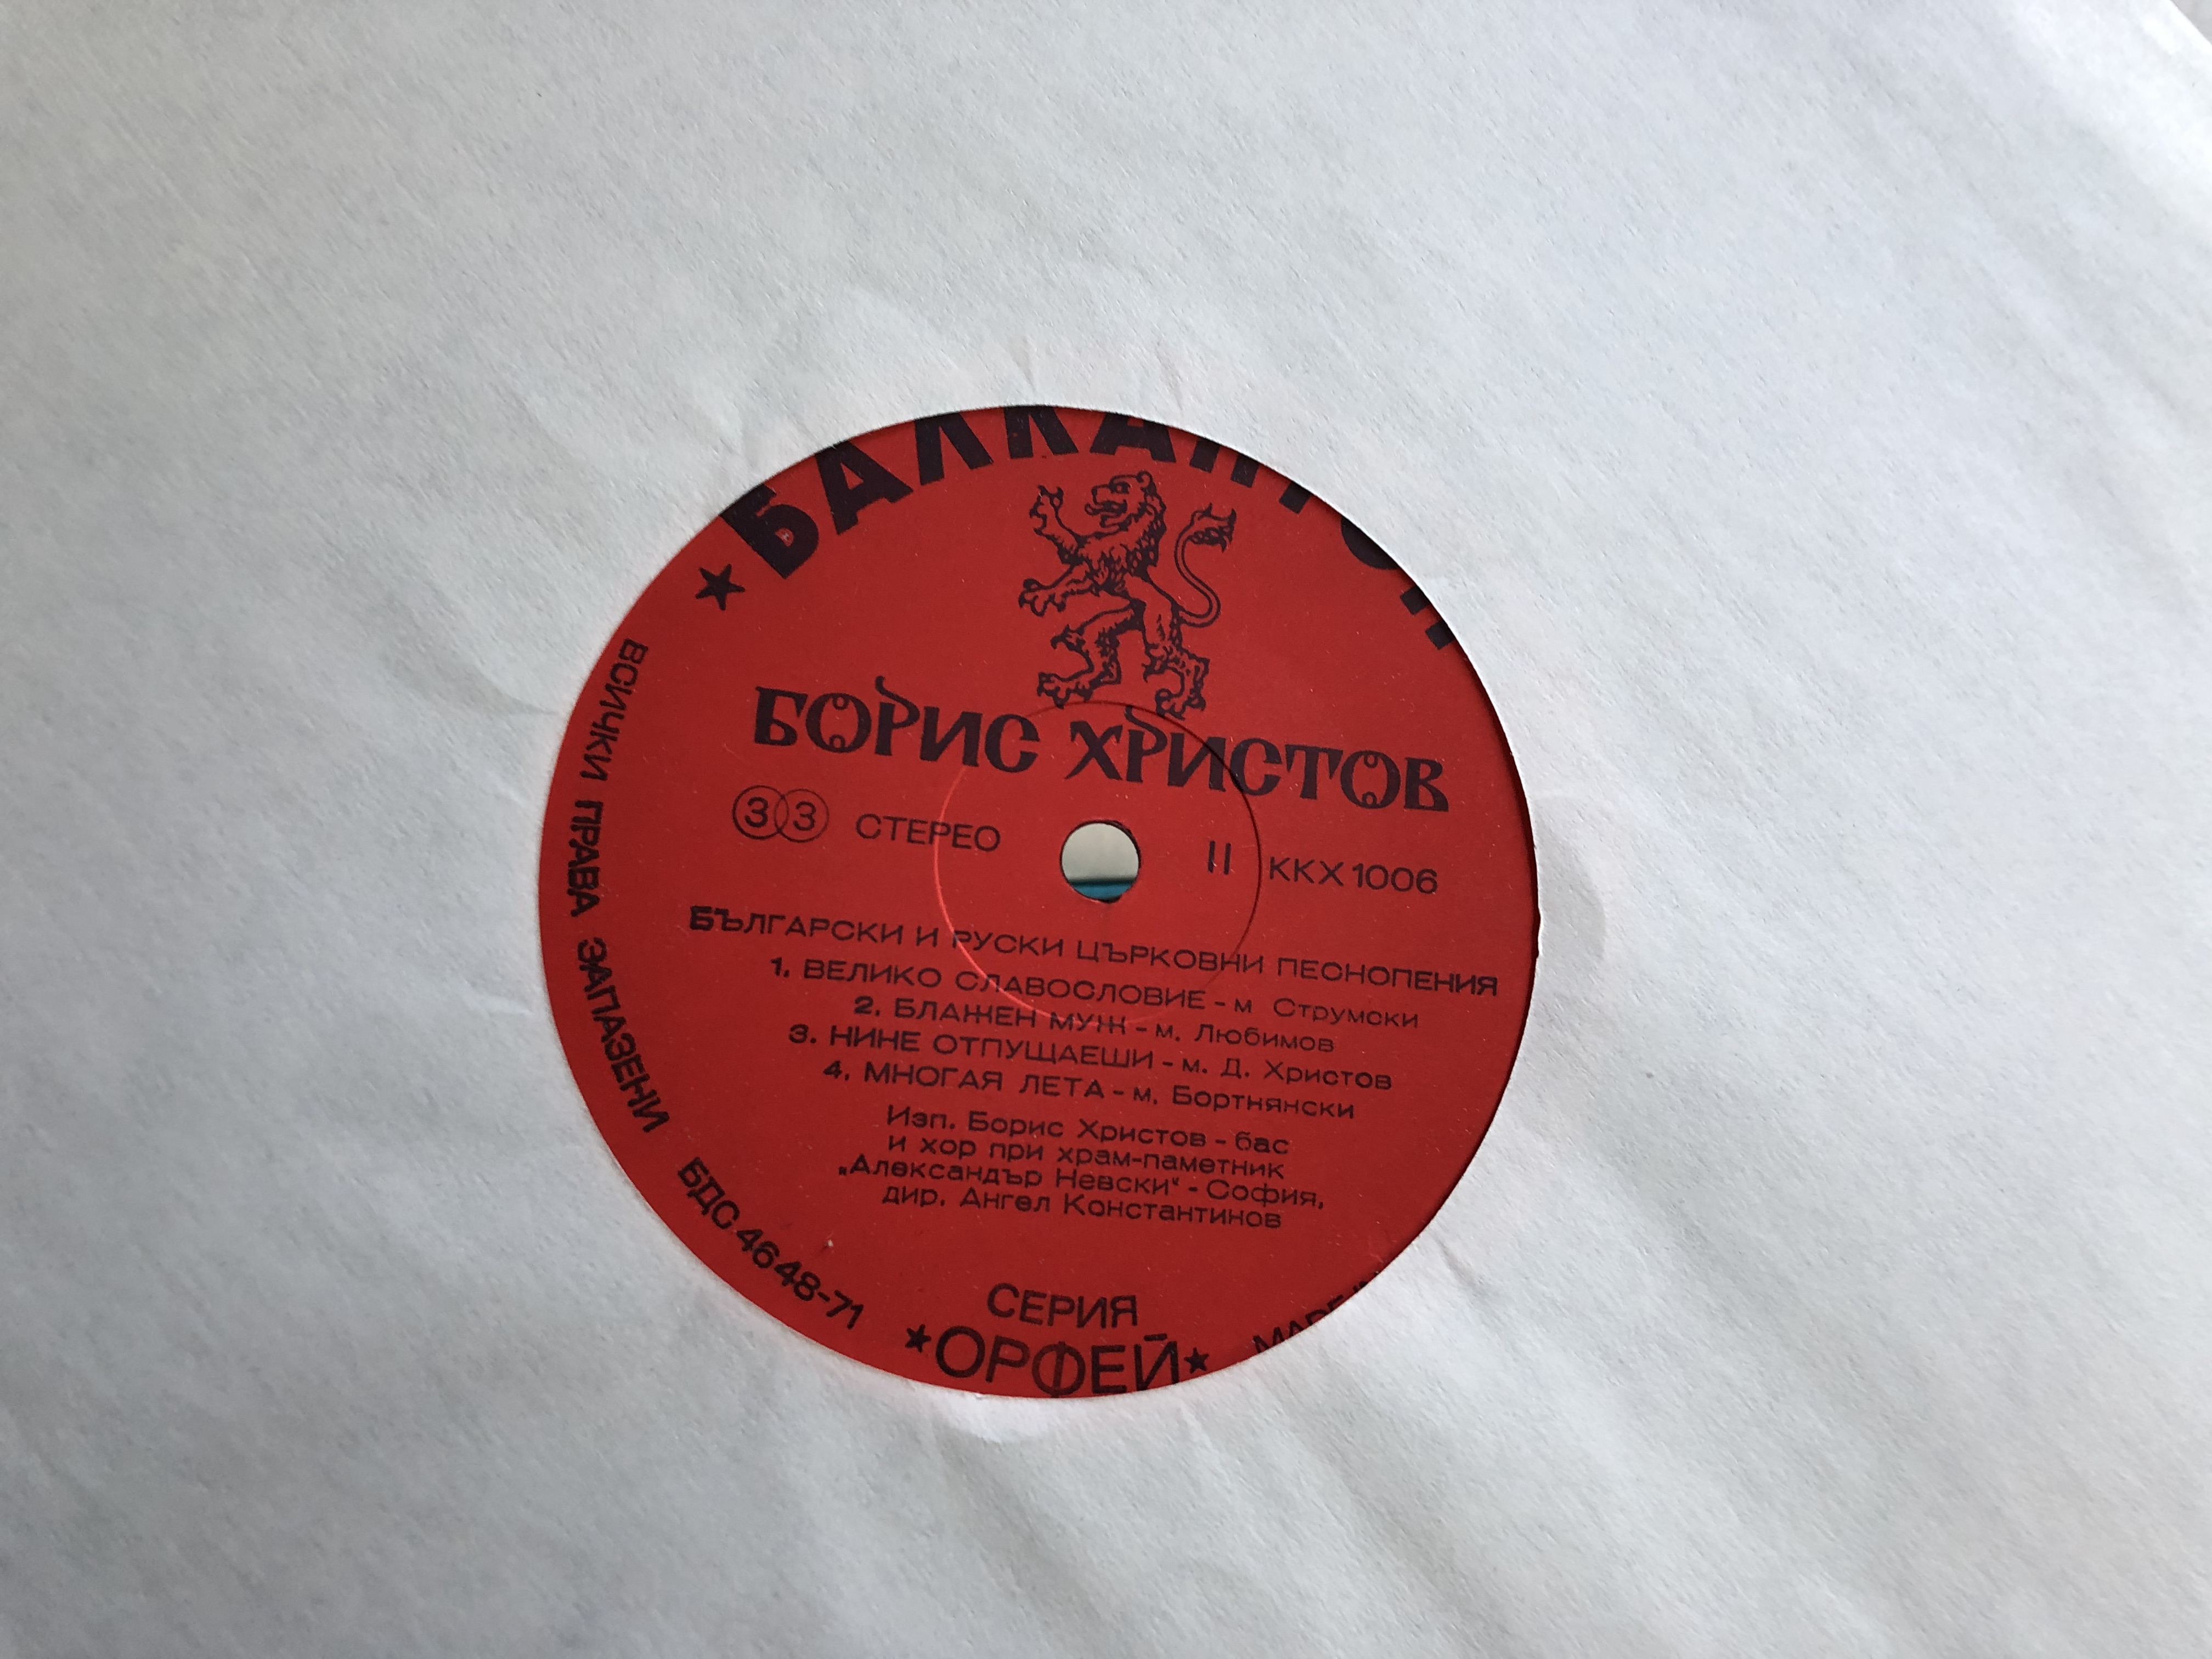 boris-christoff-bulgarian-and-russian-religious-chants-lp-stereo-1006-3-.jpg